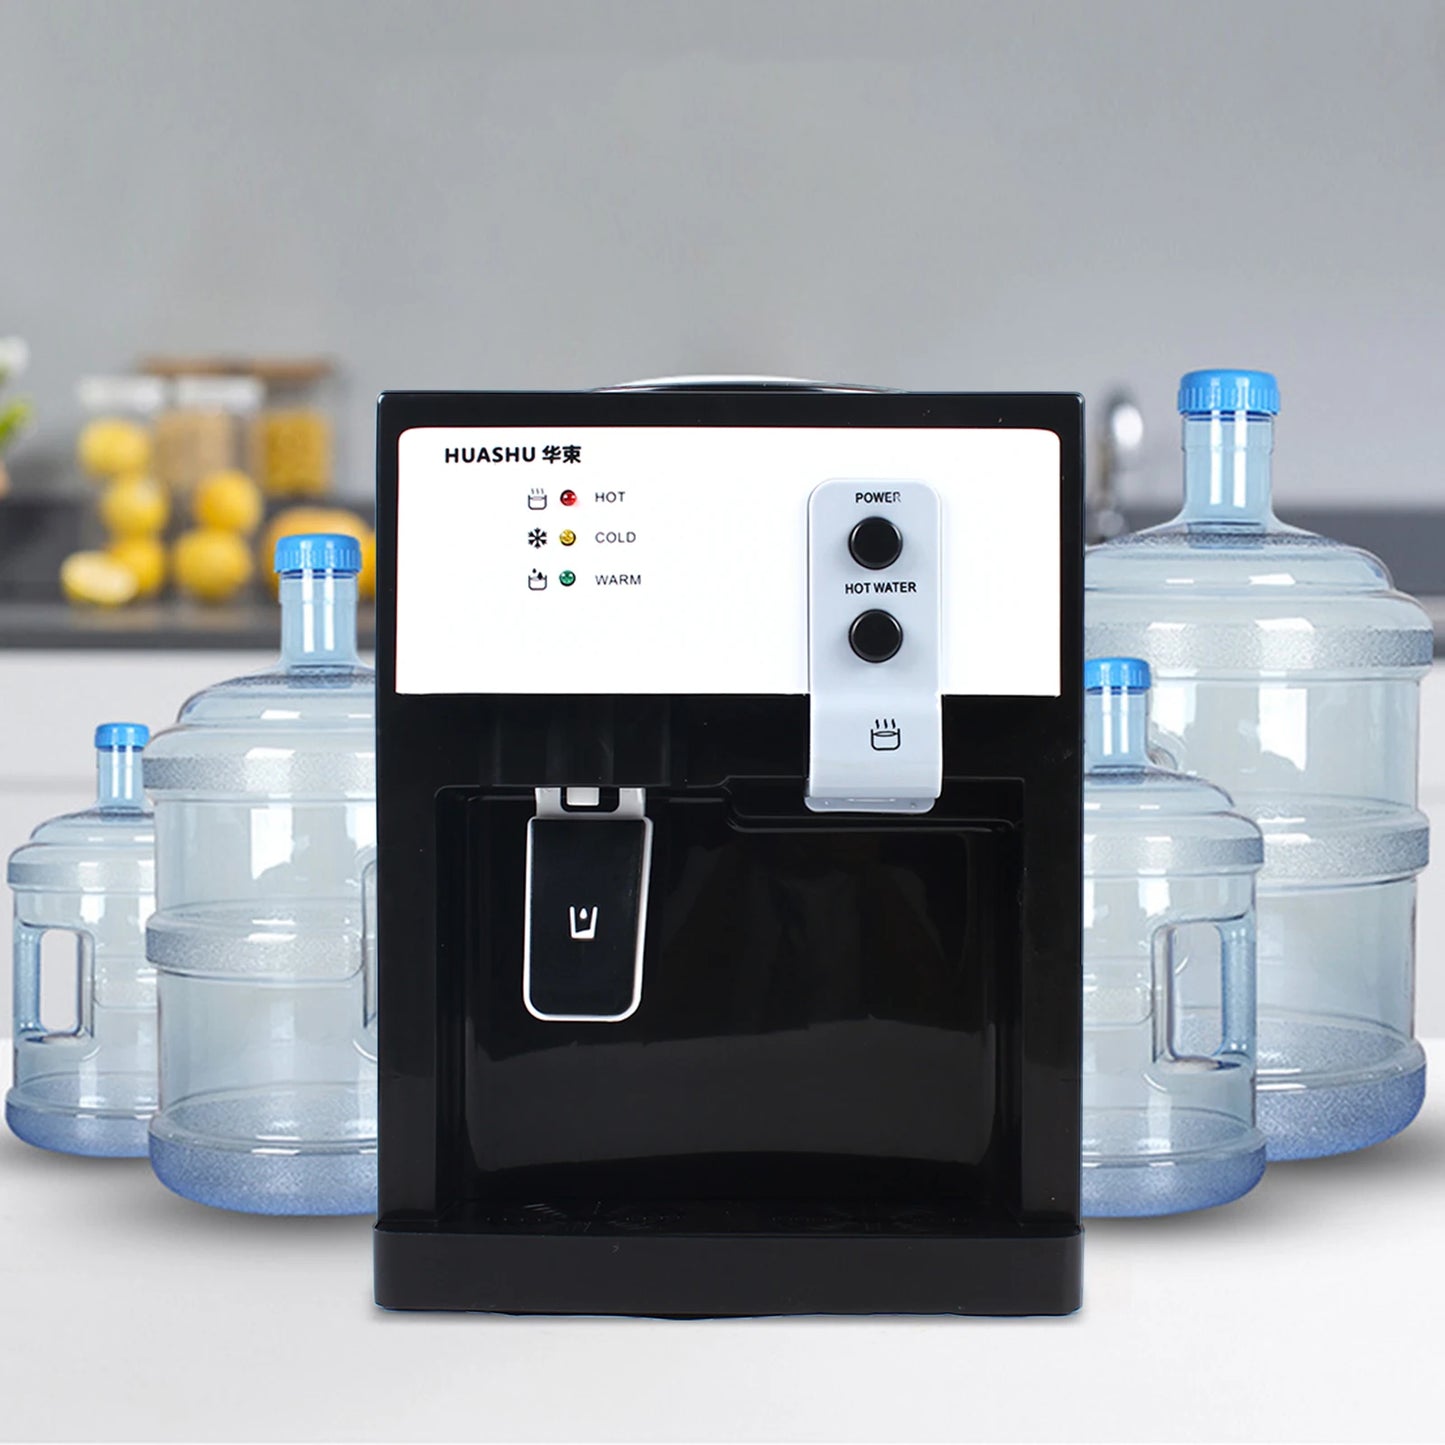 Water Cooler Dispenser - Desktop Electric Hot and Cold, 3 Temperature Settings